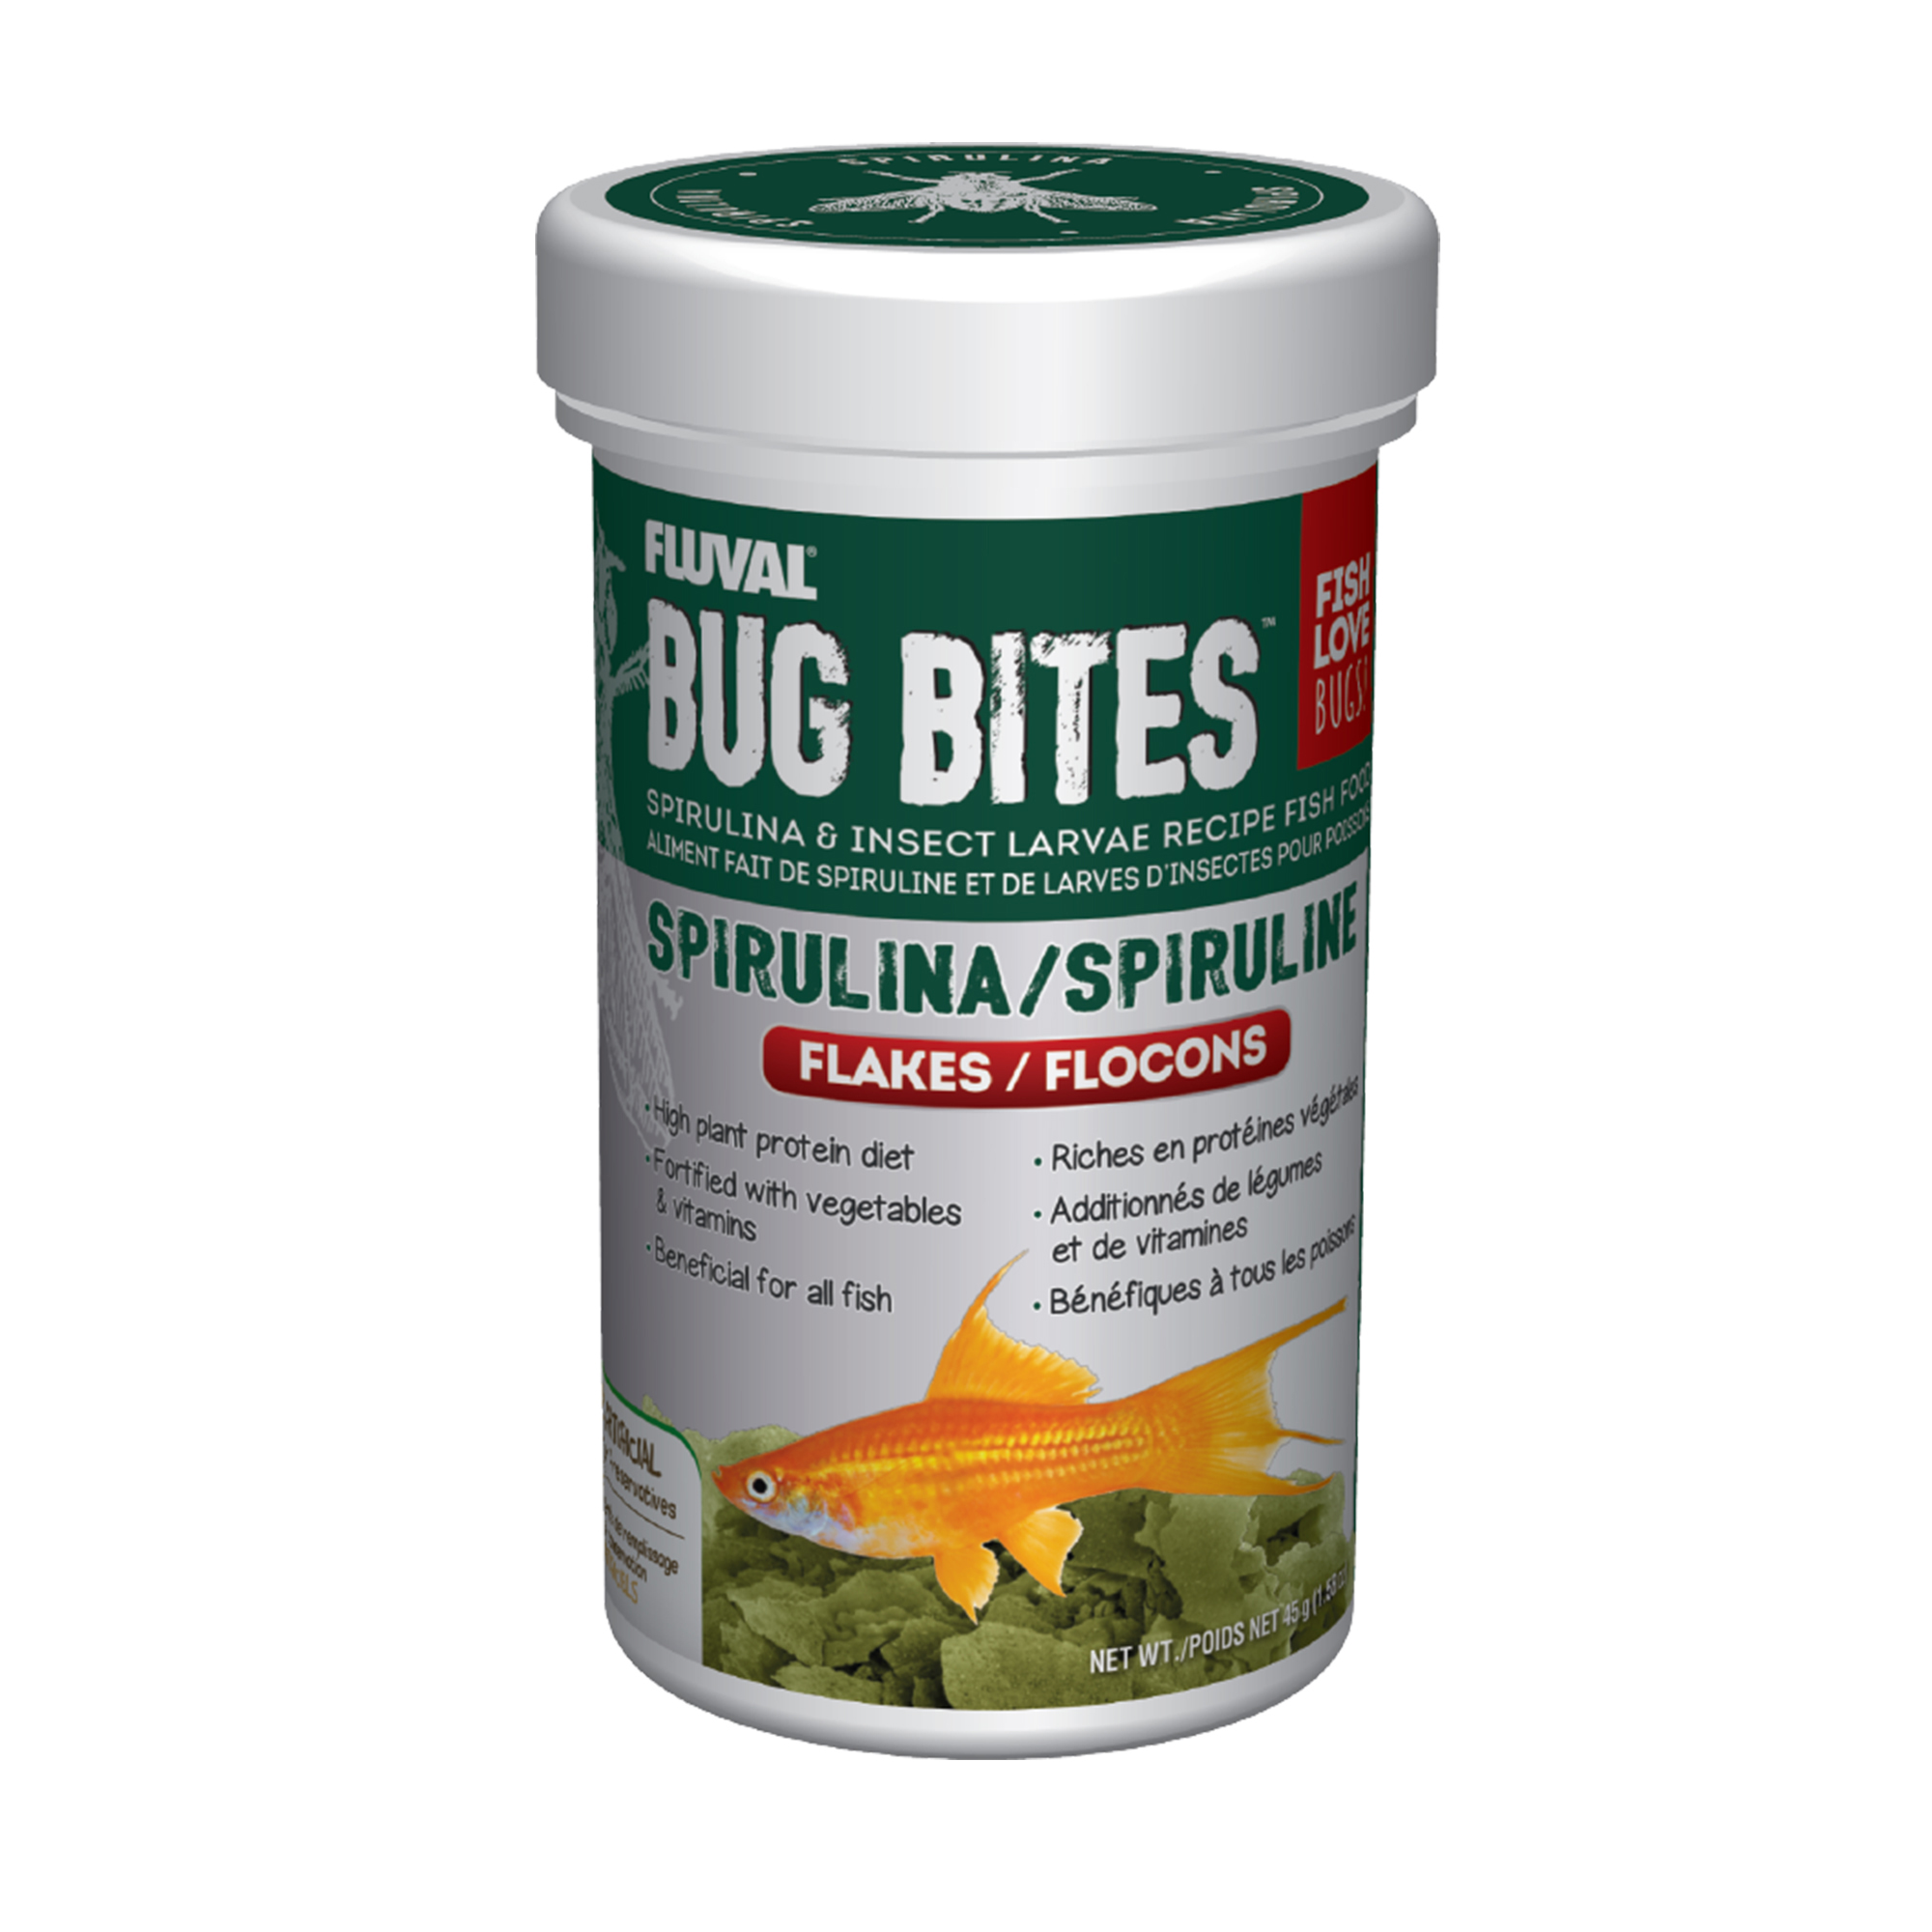 Fluval Bug Bites Spirulina Flakes 1.58 oz.